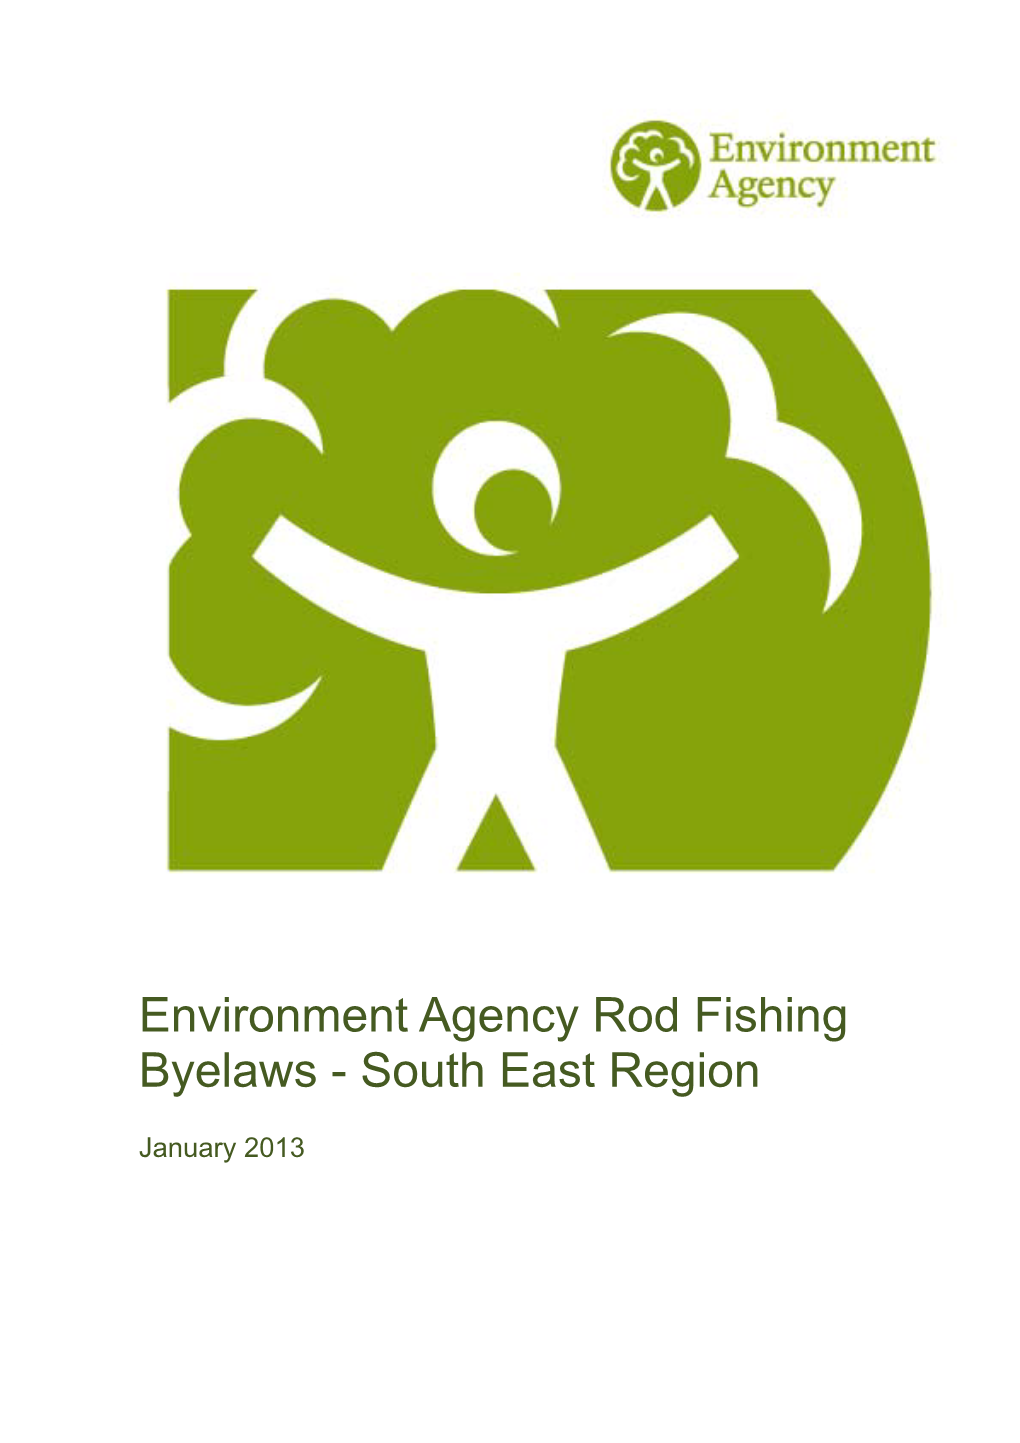 Environment Agency Rod Fishing Byelaws - South East Region